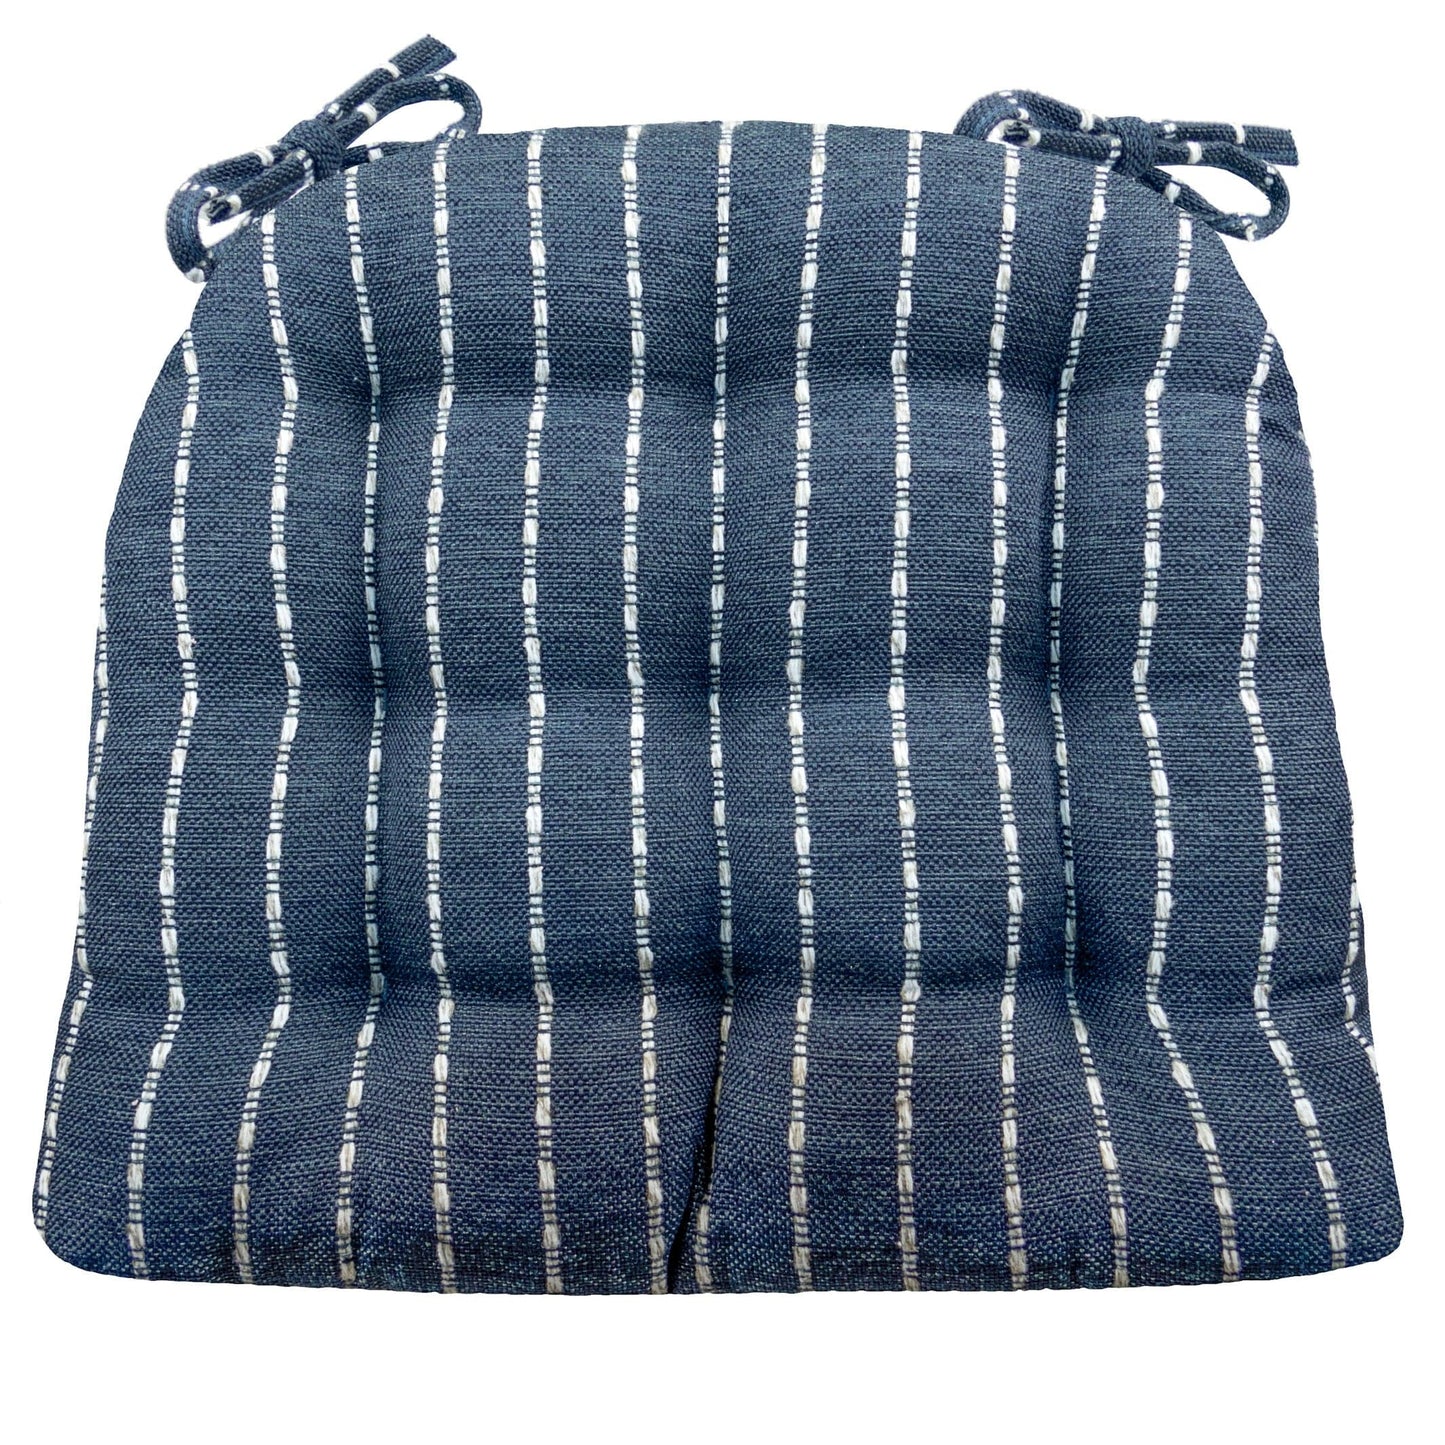 Avante Navy Blue Striped Dining Chair Pads - Barnett Home Décor